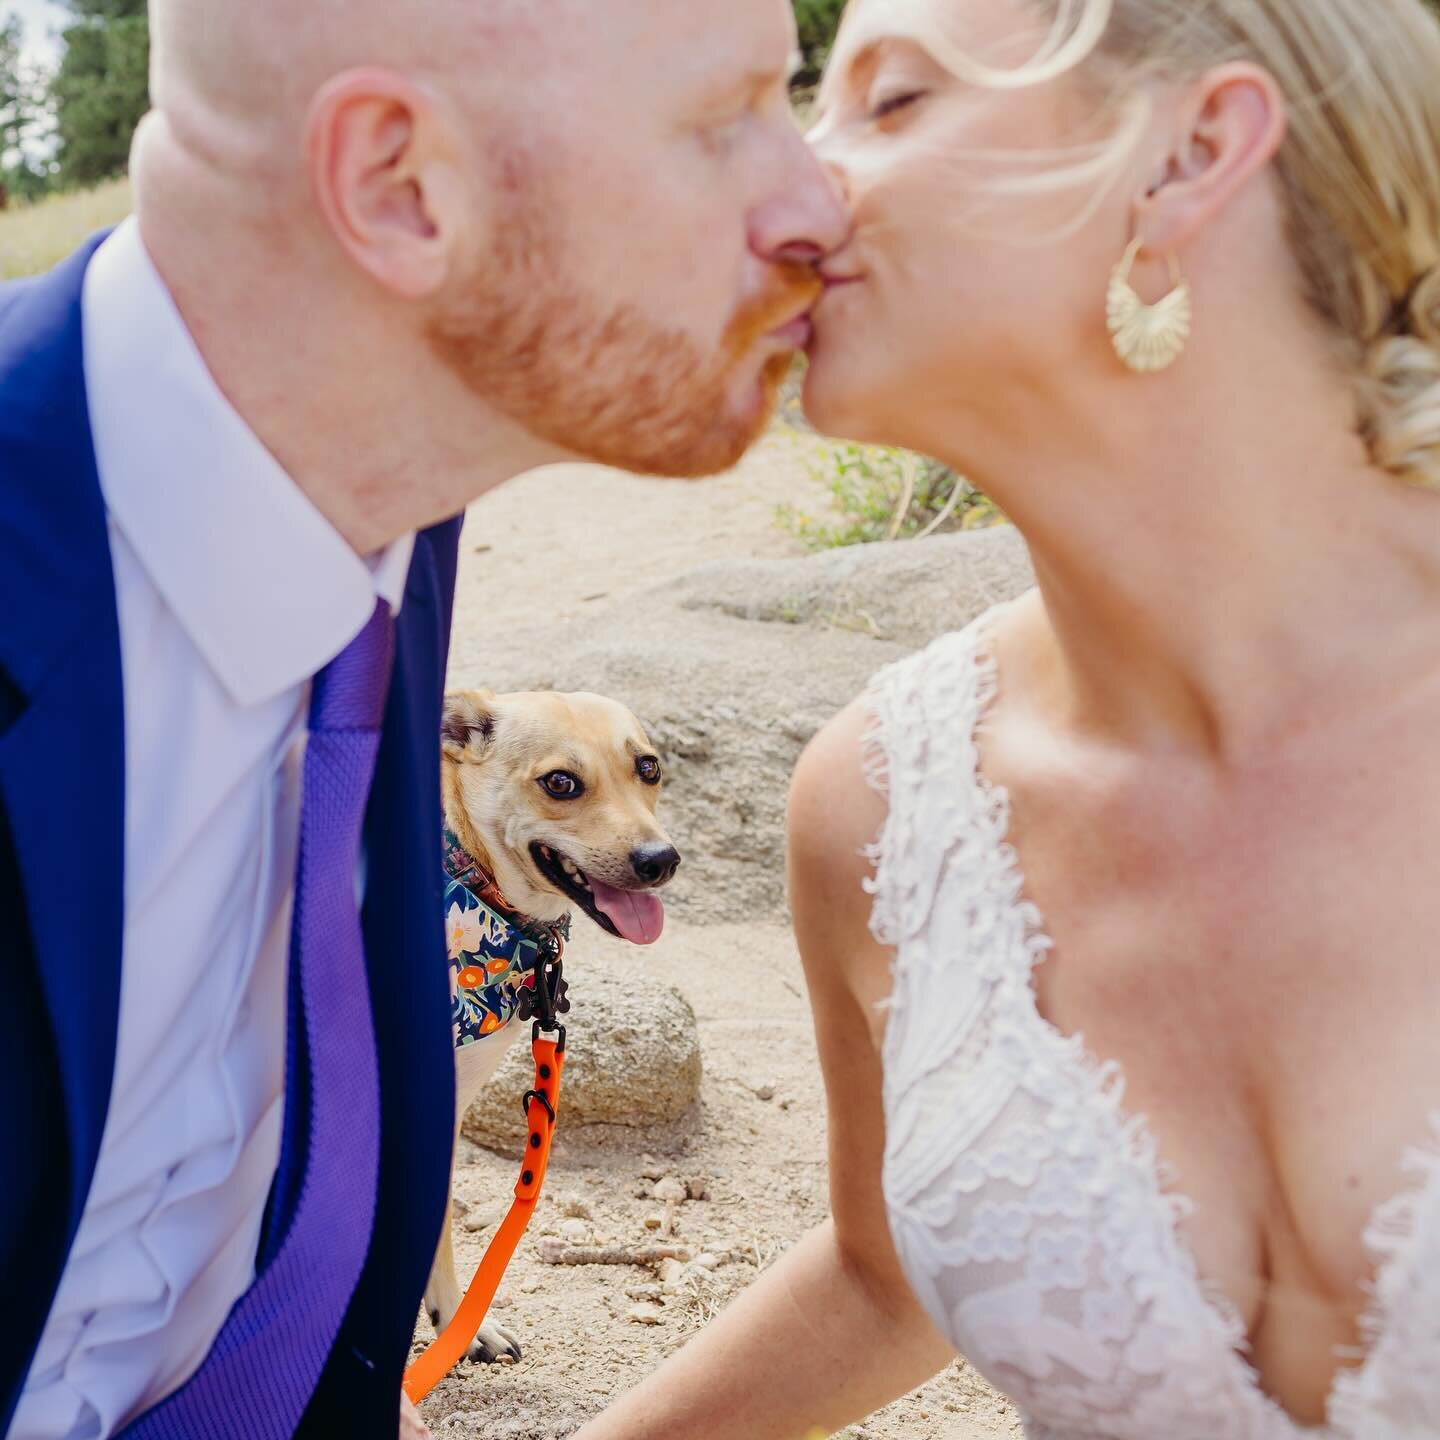 when your pup is just as happy as the groom
.
.
.
.
.
#dogsatweddings #dogs #dogsofinstagram #muttsofinstagram #brideandgroom #weddingportrait #furbaby #dogsarefamily #family #makeeveryonehappy #boulderweddingphotographer #denverweddingphotographer #